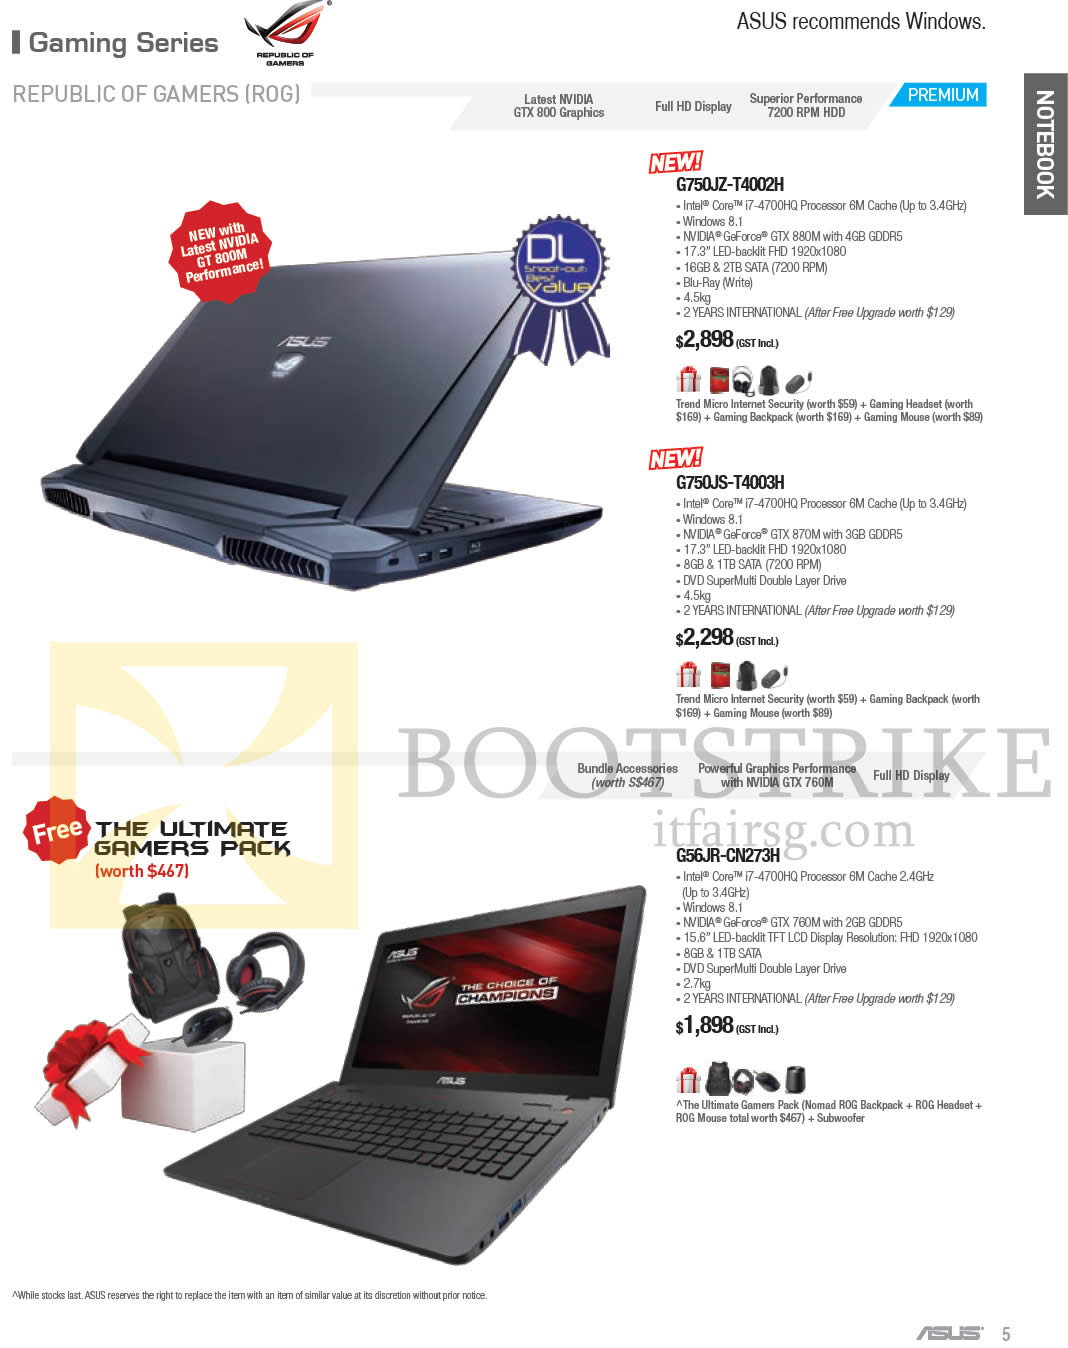 PC SHOW 2014 price list image brochure of ASUS Notebooks ROG G750JZ-T4002H, G750JS-T4003H, G56JR-CN273H